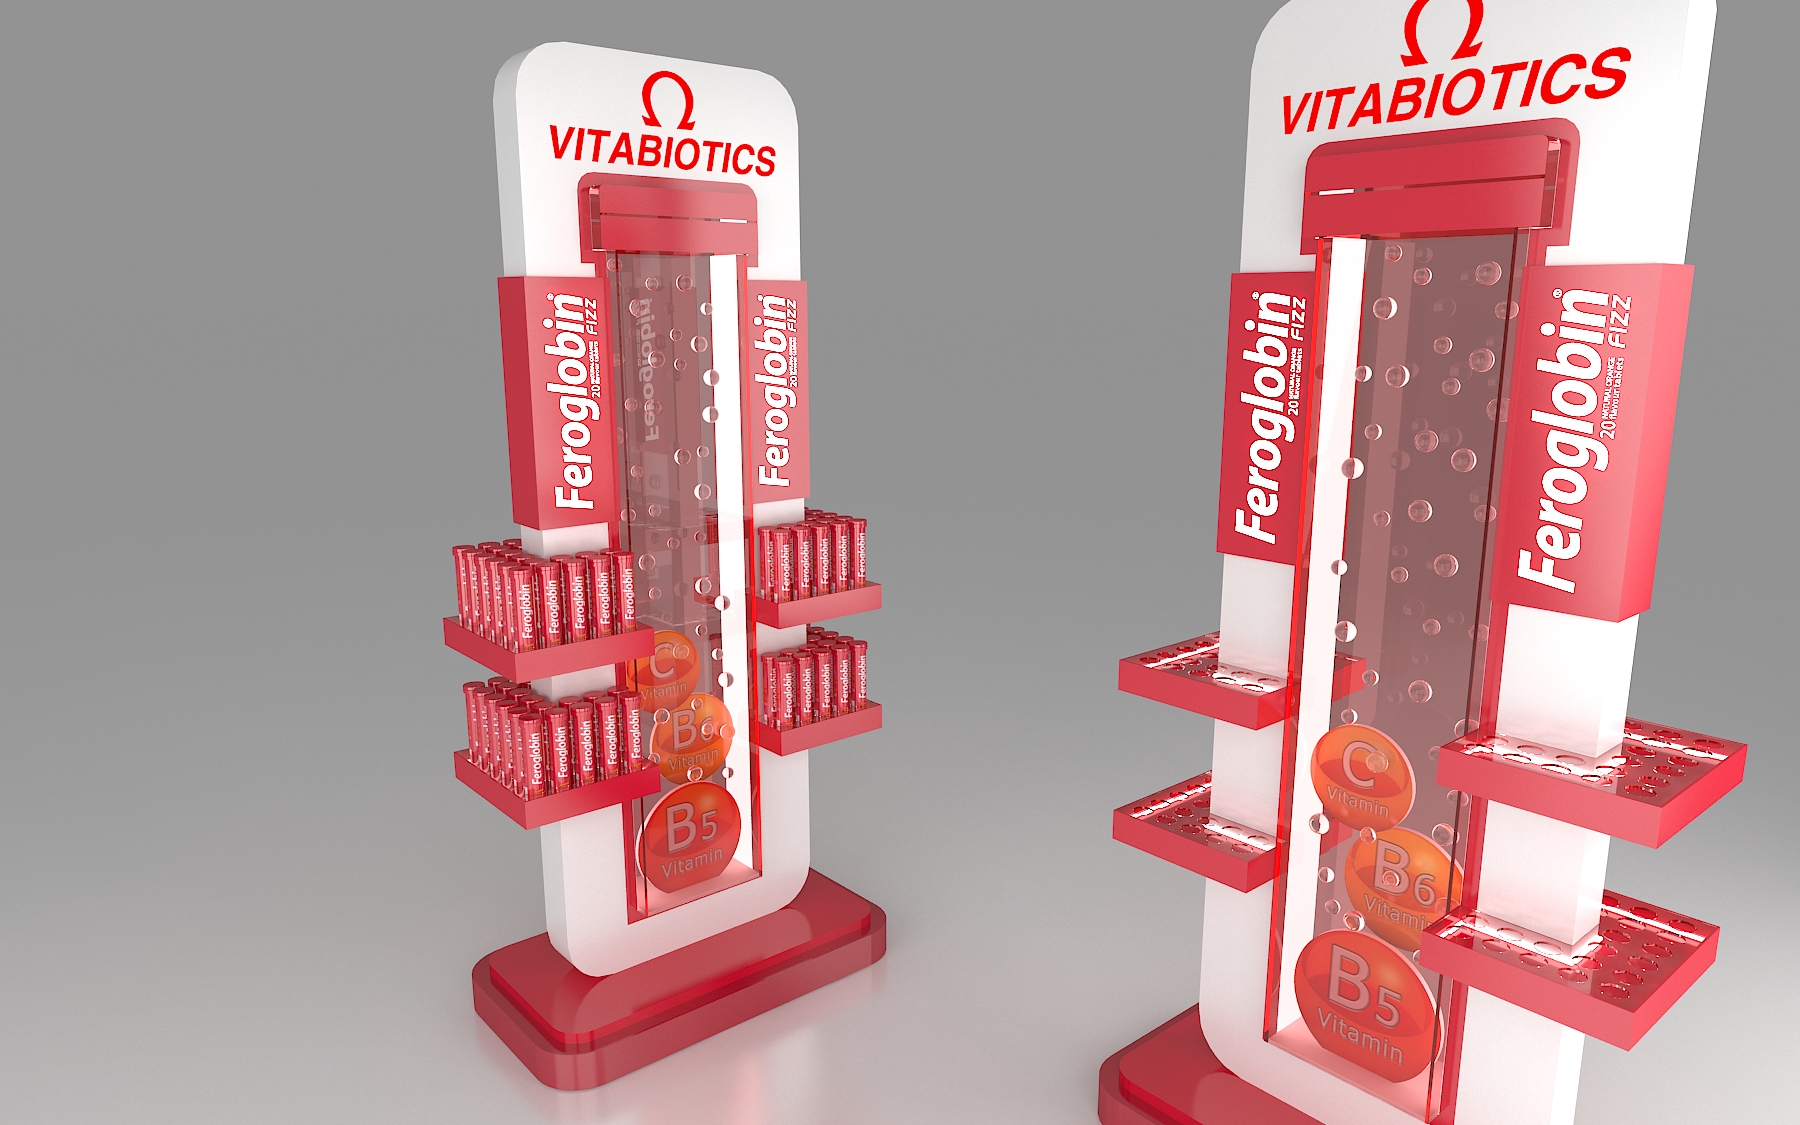 Vitabiotics Innovative Stand